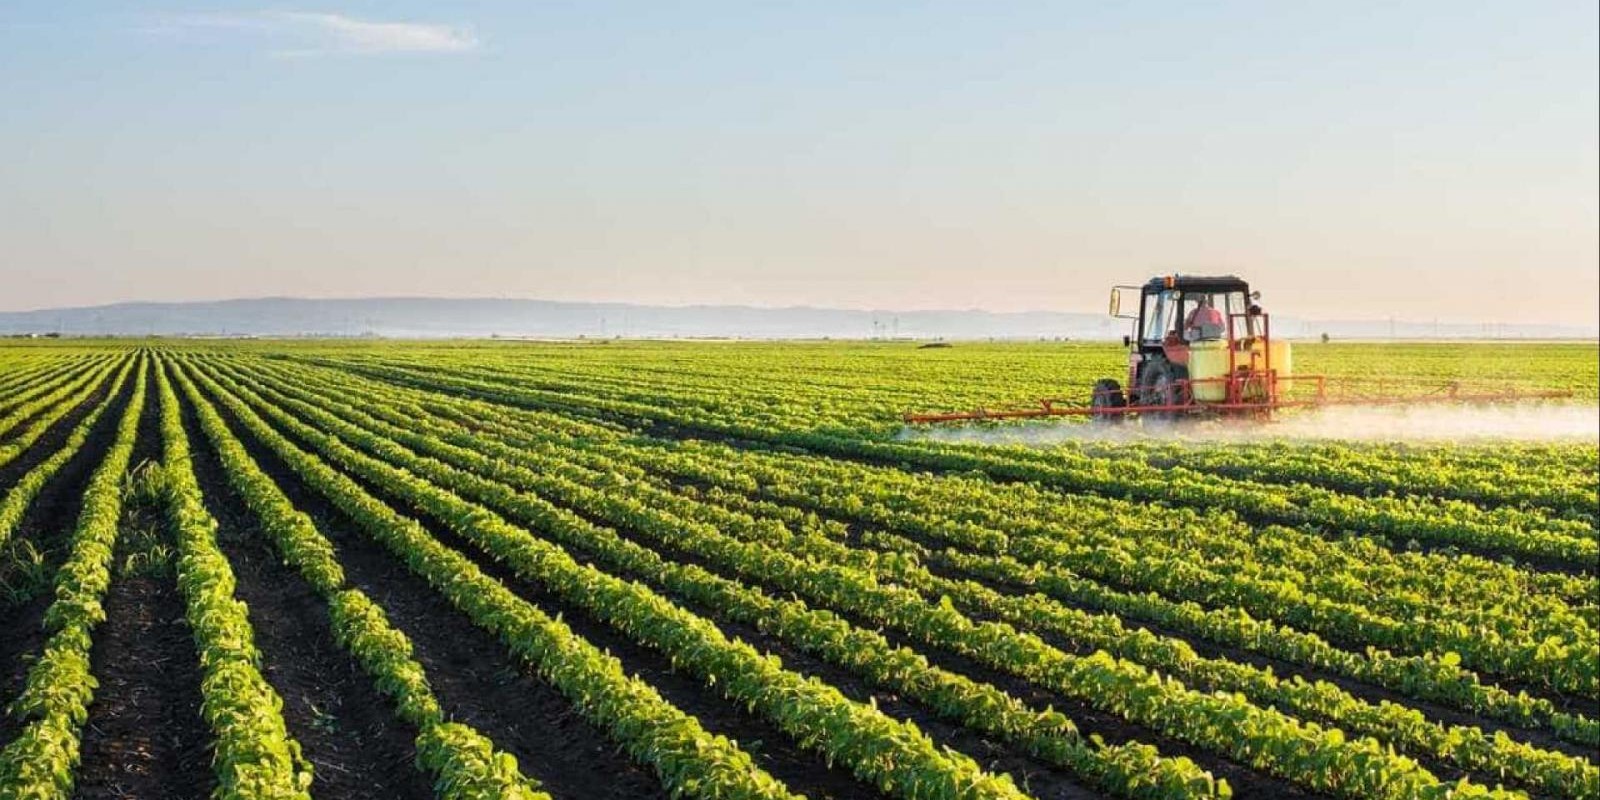 As 5 tendências da agricultura segundo a Bayer